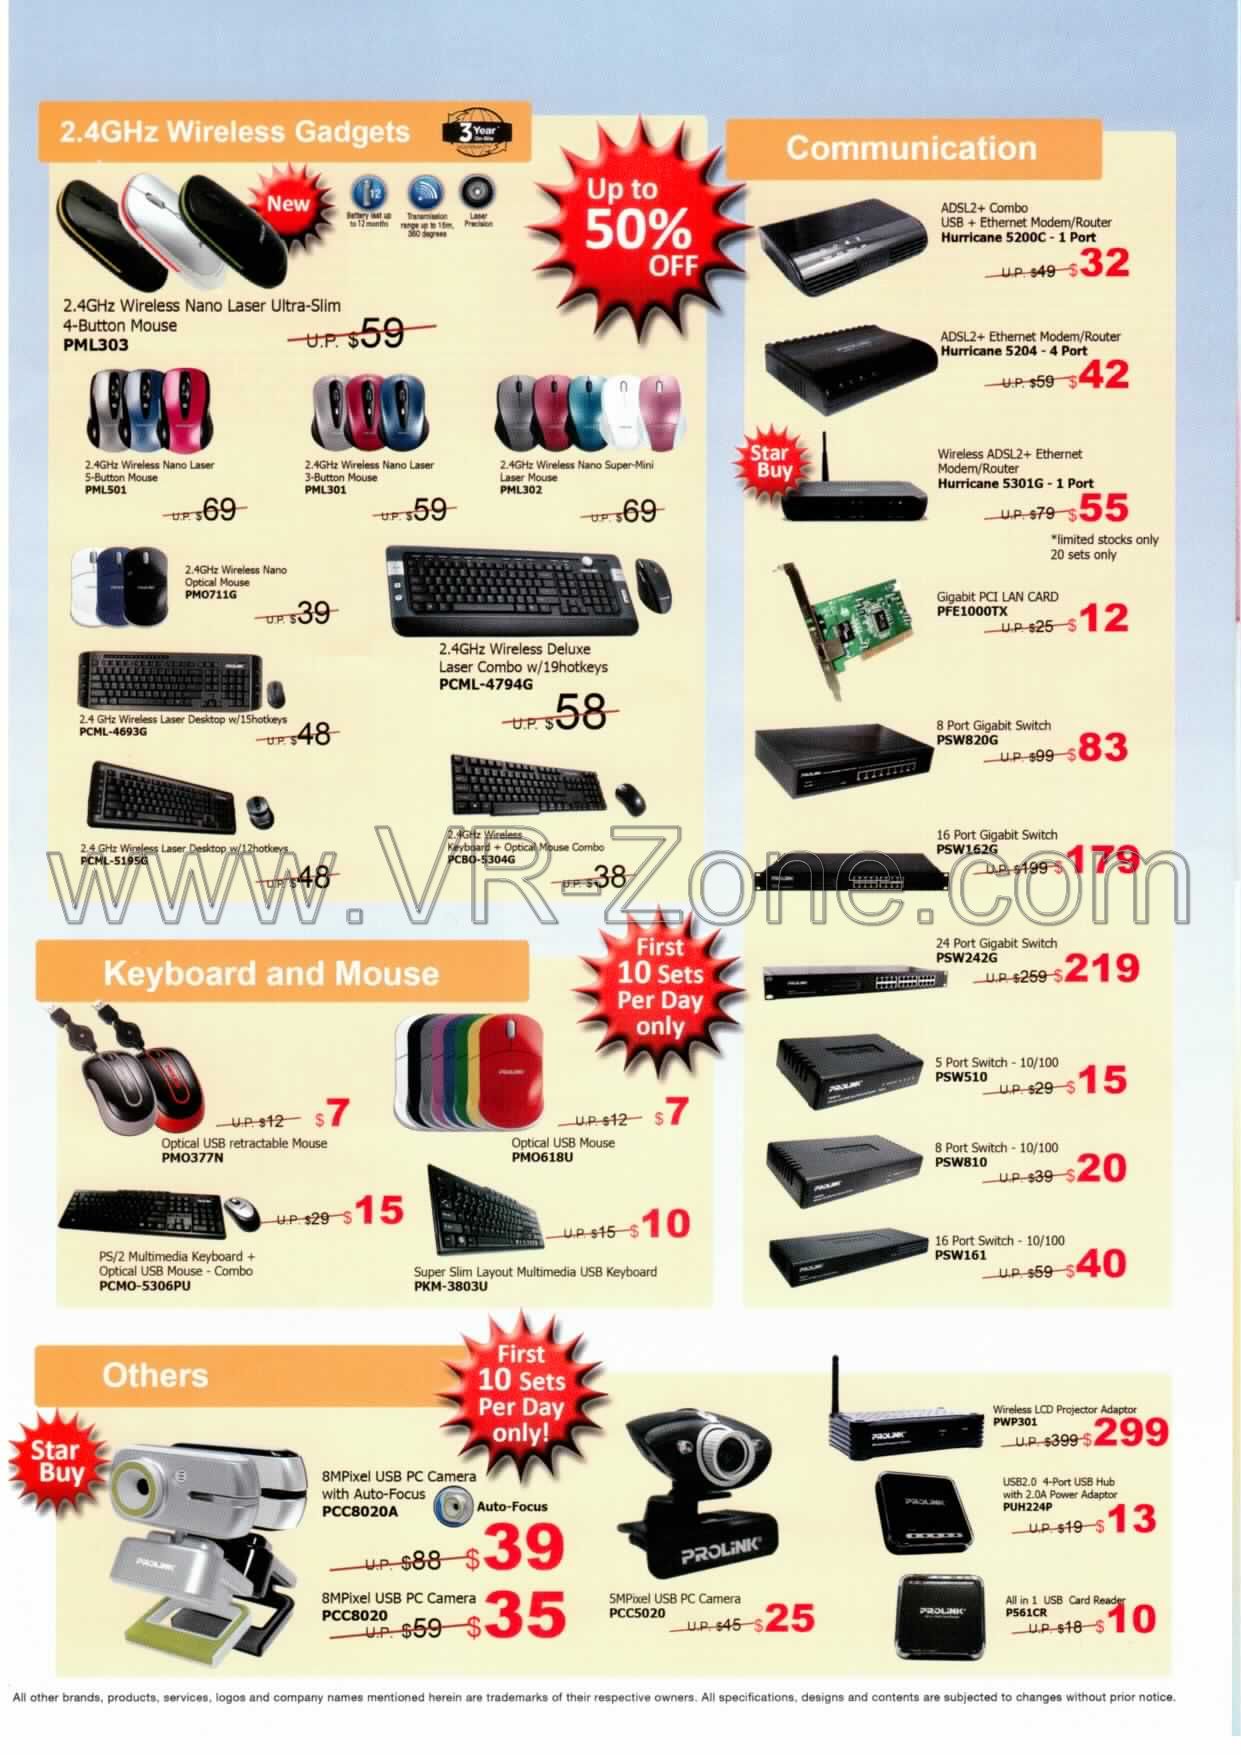 Sitex 2009 price list image brochure of Prolink Wireless Keyboard Mouse Router Modem Gigabit Switch Webcam Camera